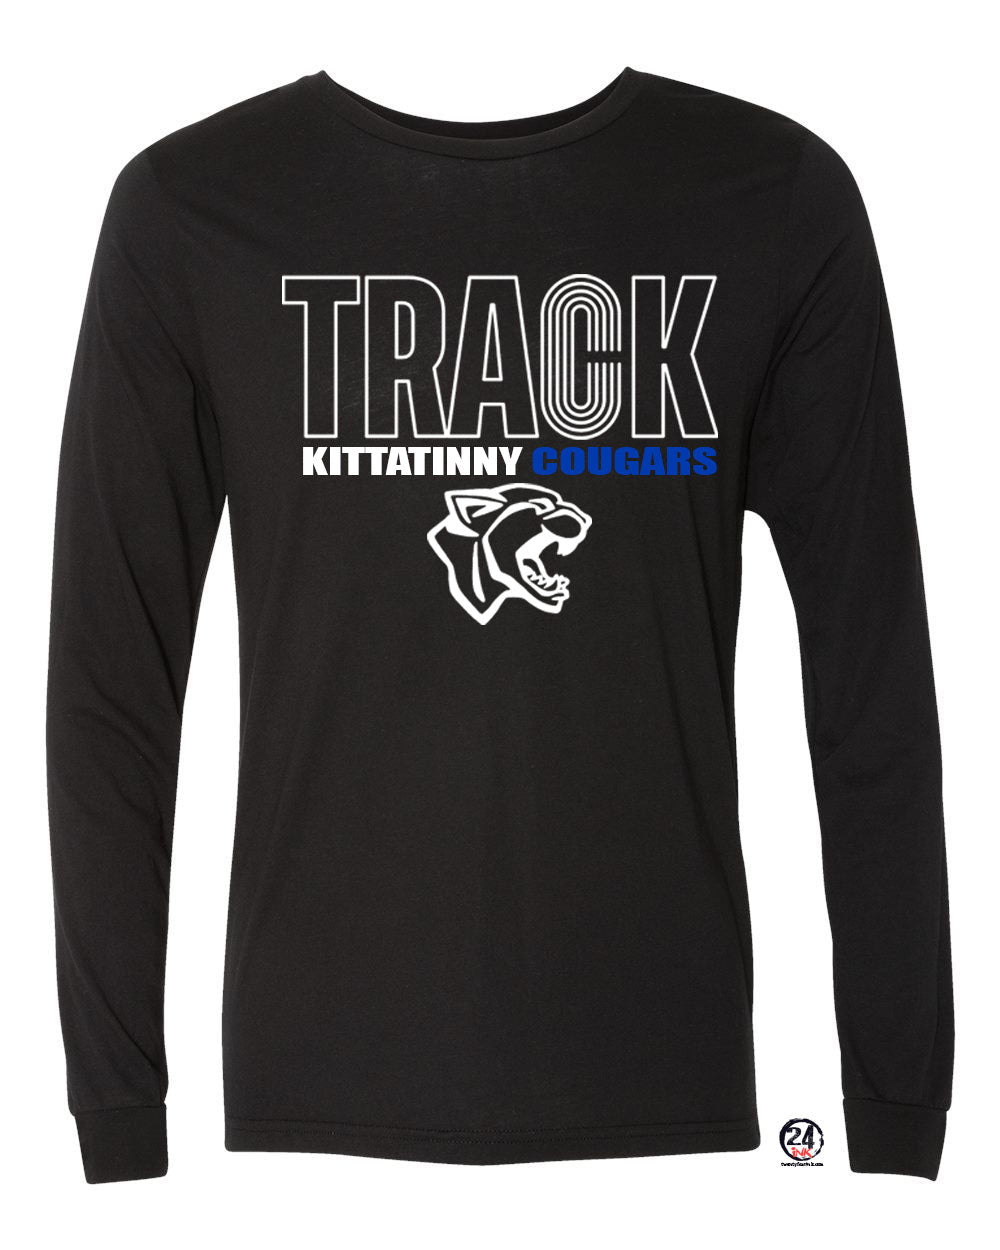 Kittatinny Track Design 1 Long Sleeve Shirt